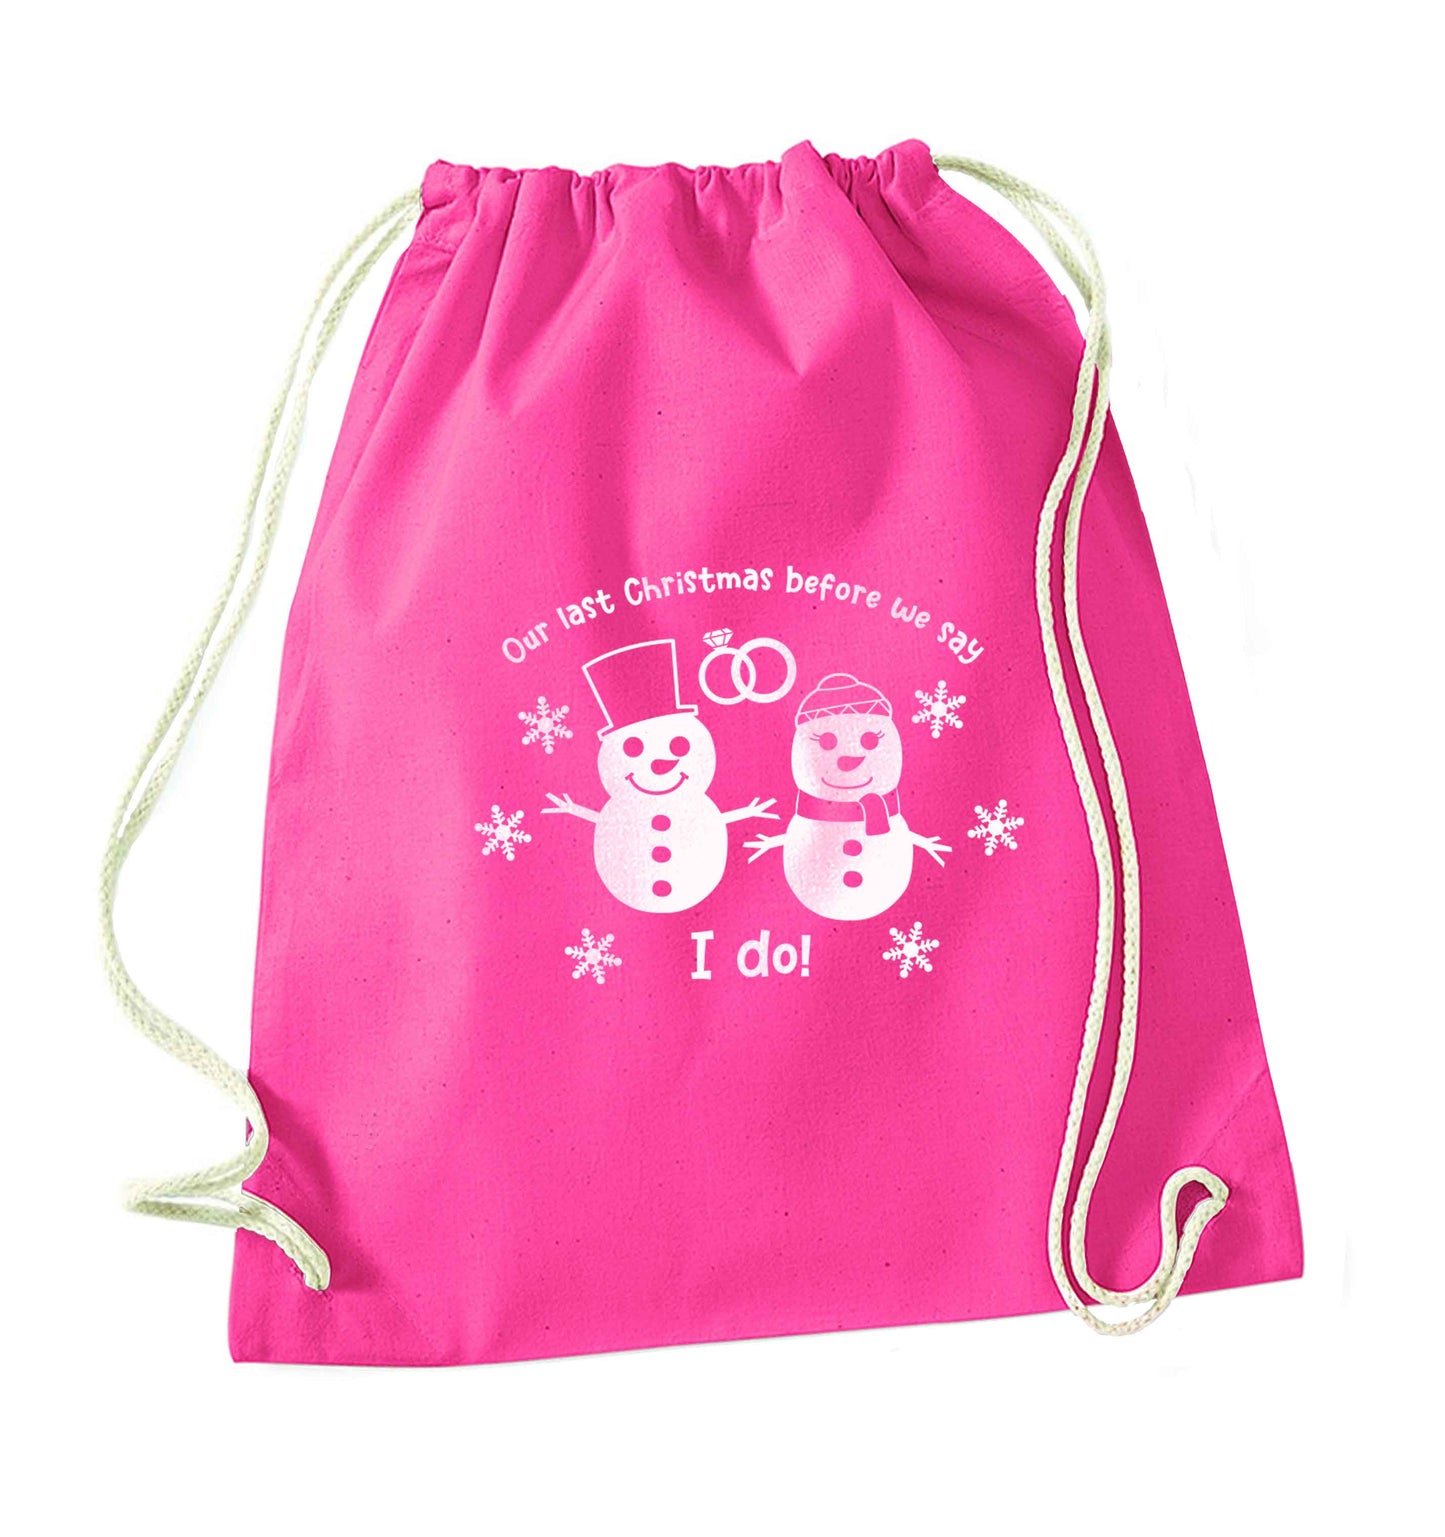 Last Christmas before we say I do pink drawstring bag